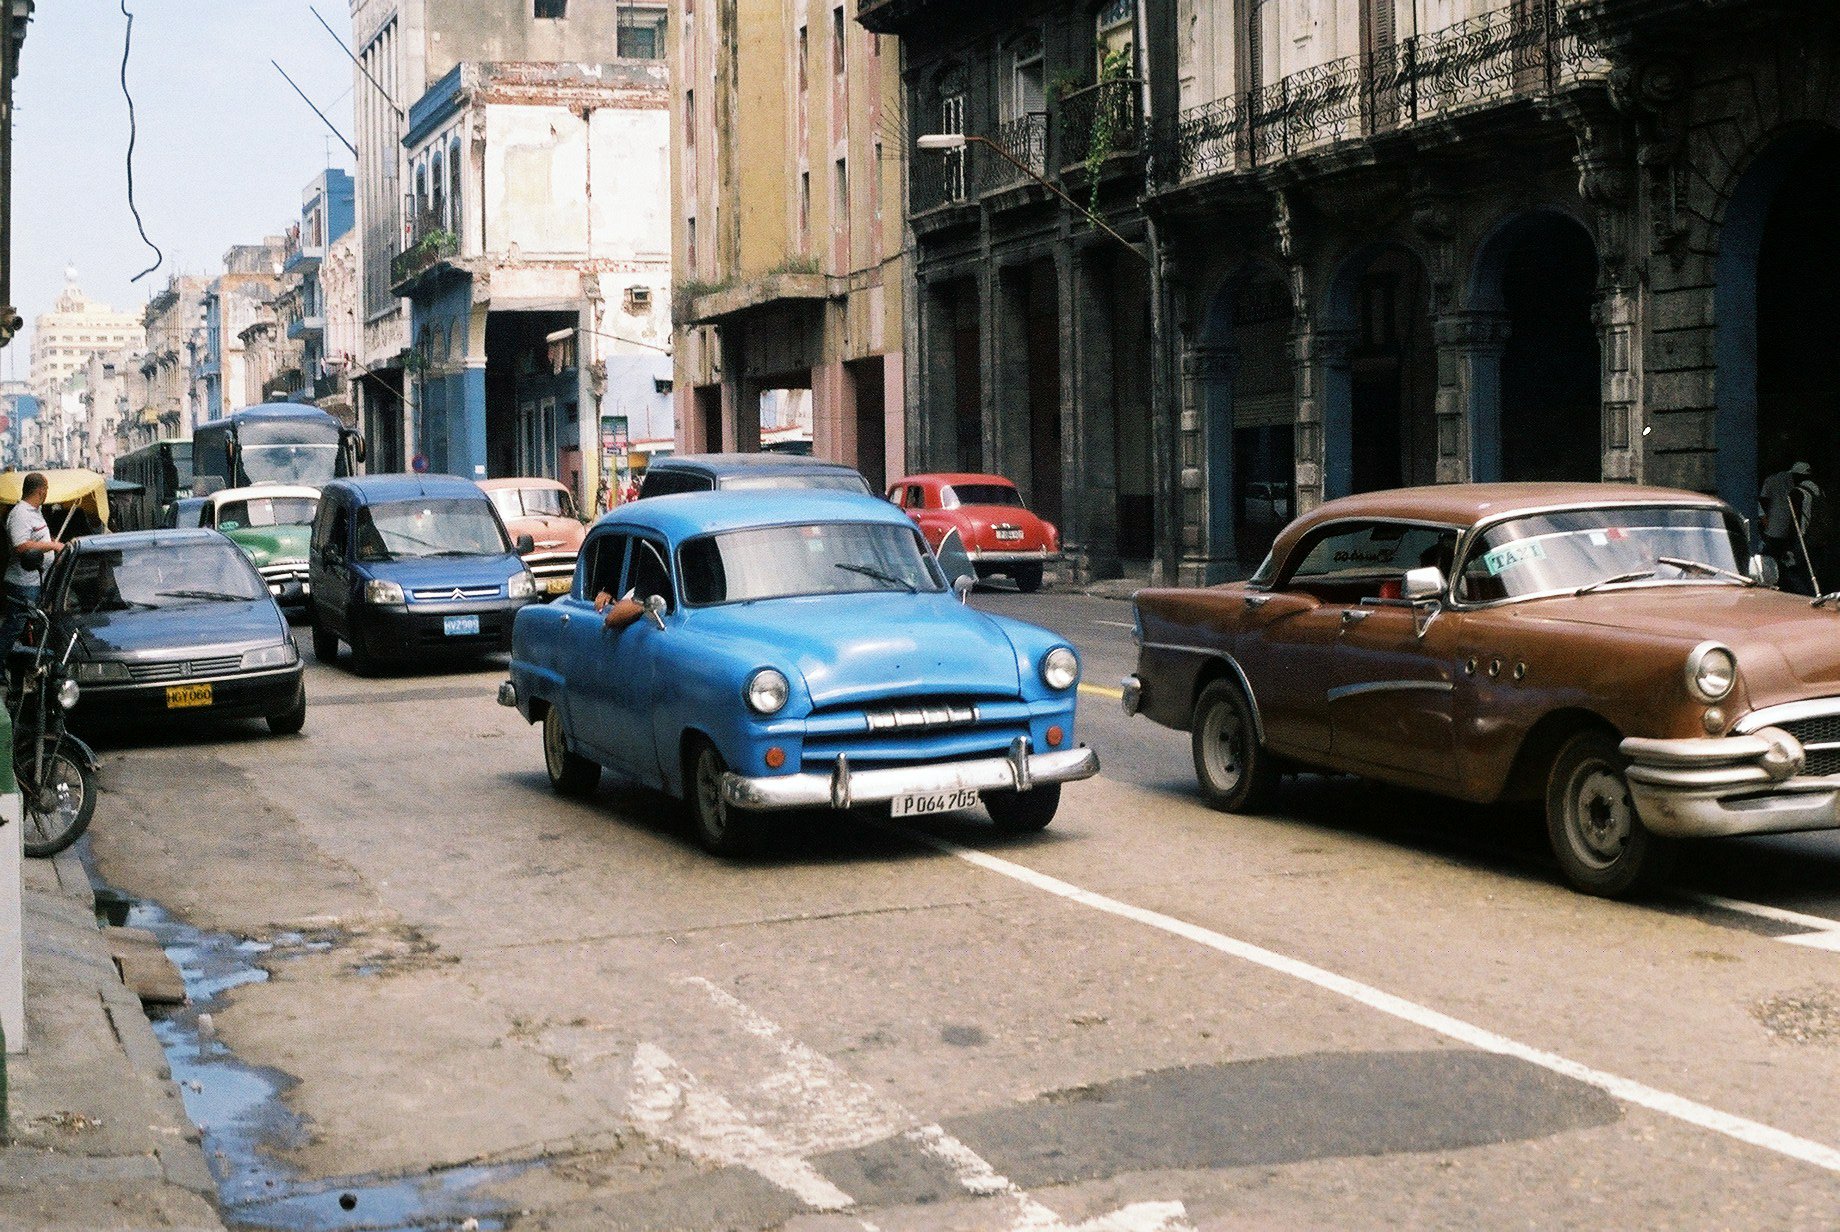  Havana - Cuba 